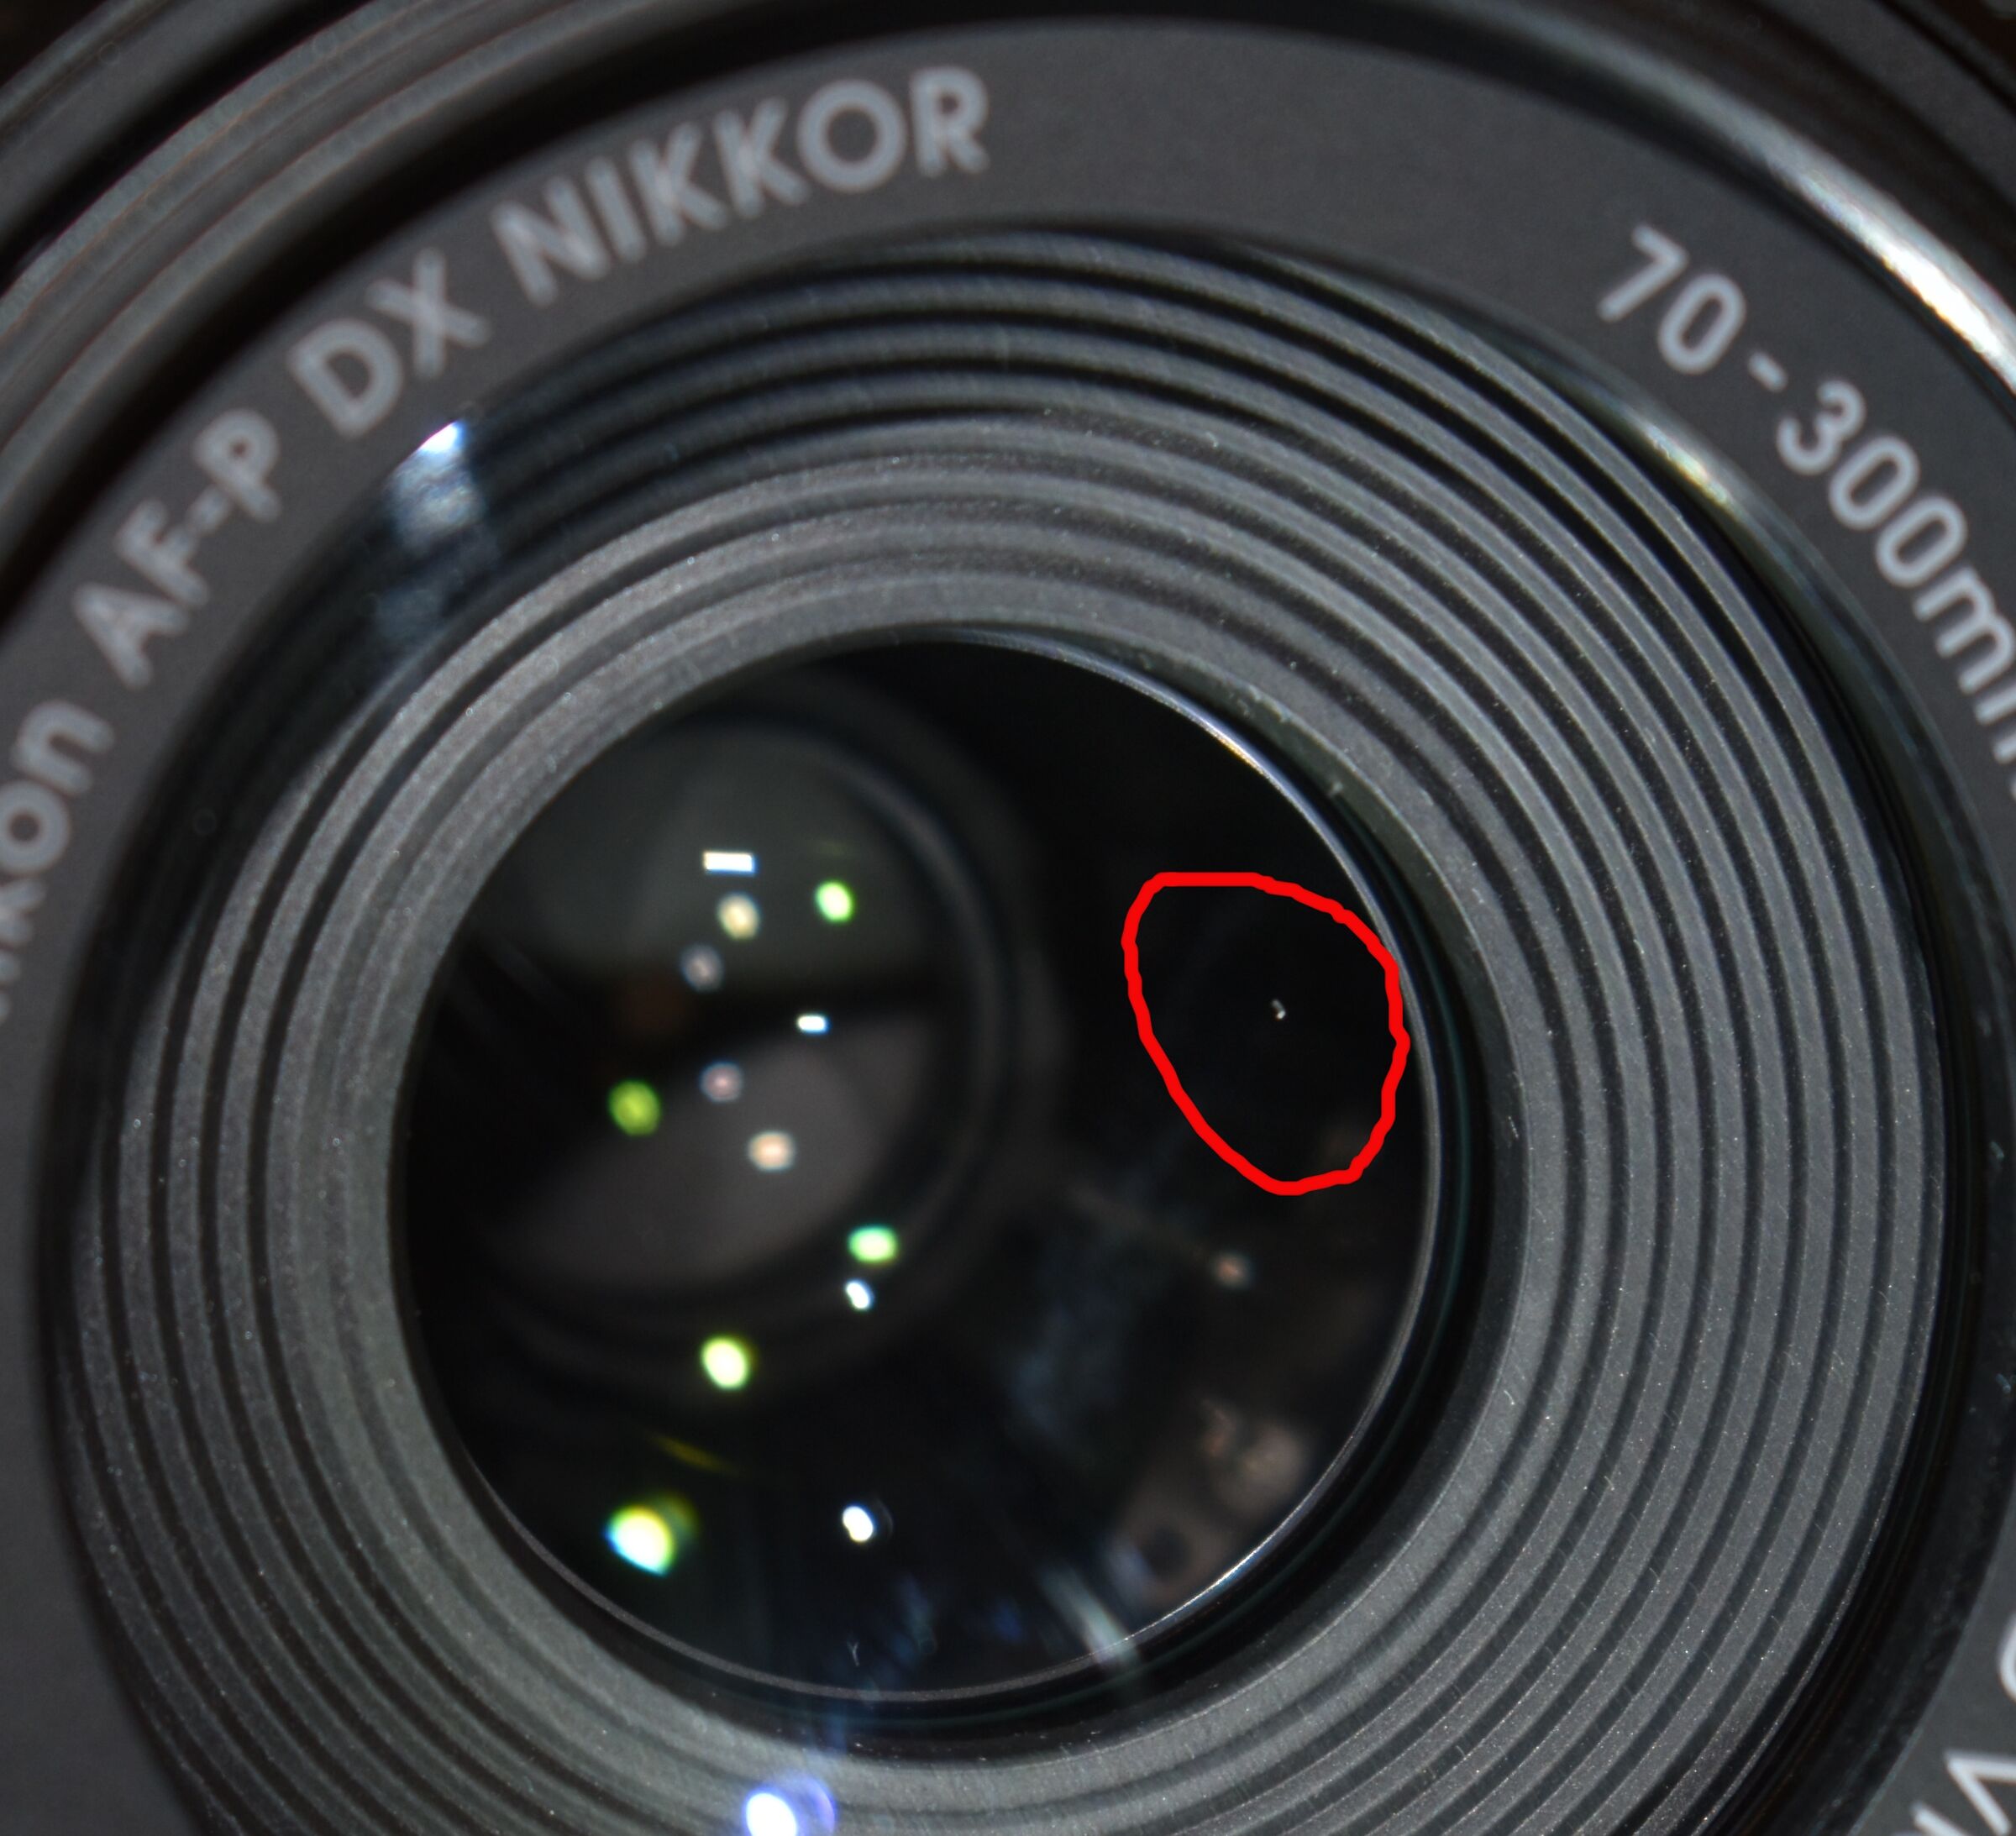 Nikon 70 300 air bubble in the lens ...